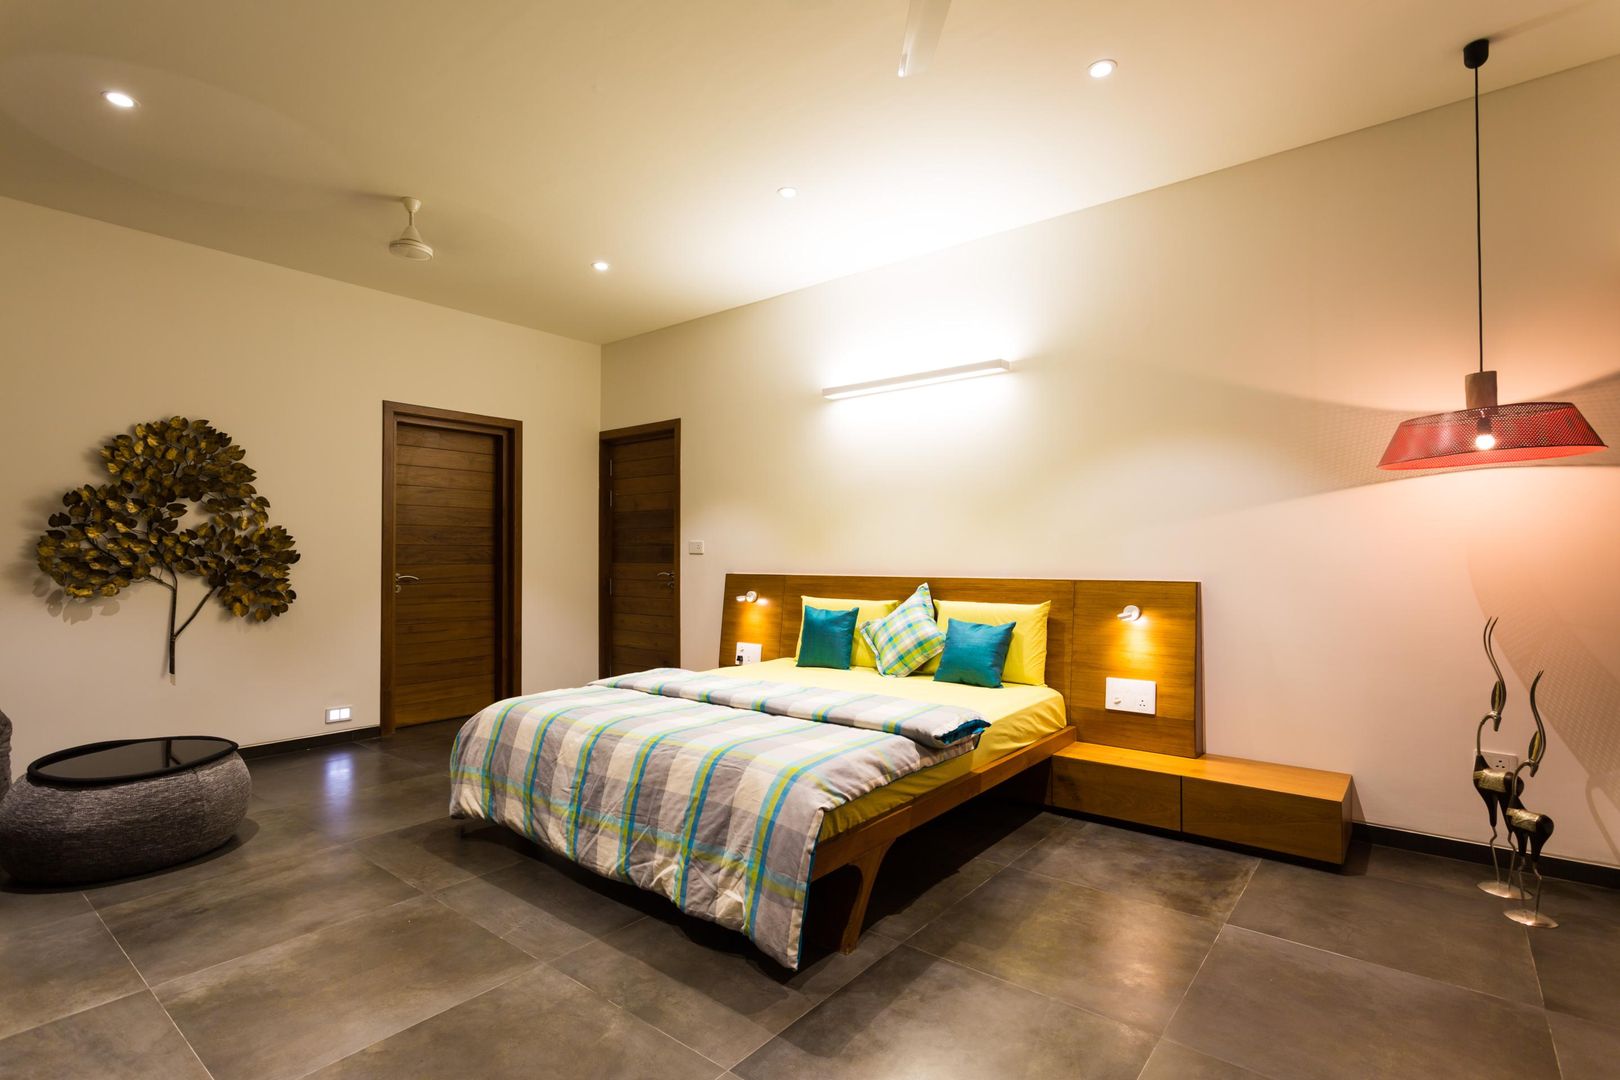 Jayesh bhai interiors, Vipul Patel Architects Vipul Patel Architects Modern style bedroom